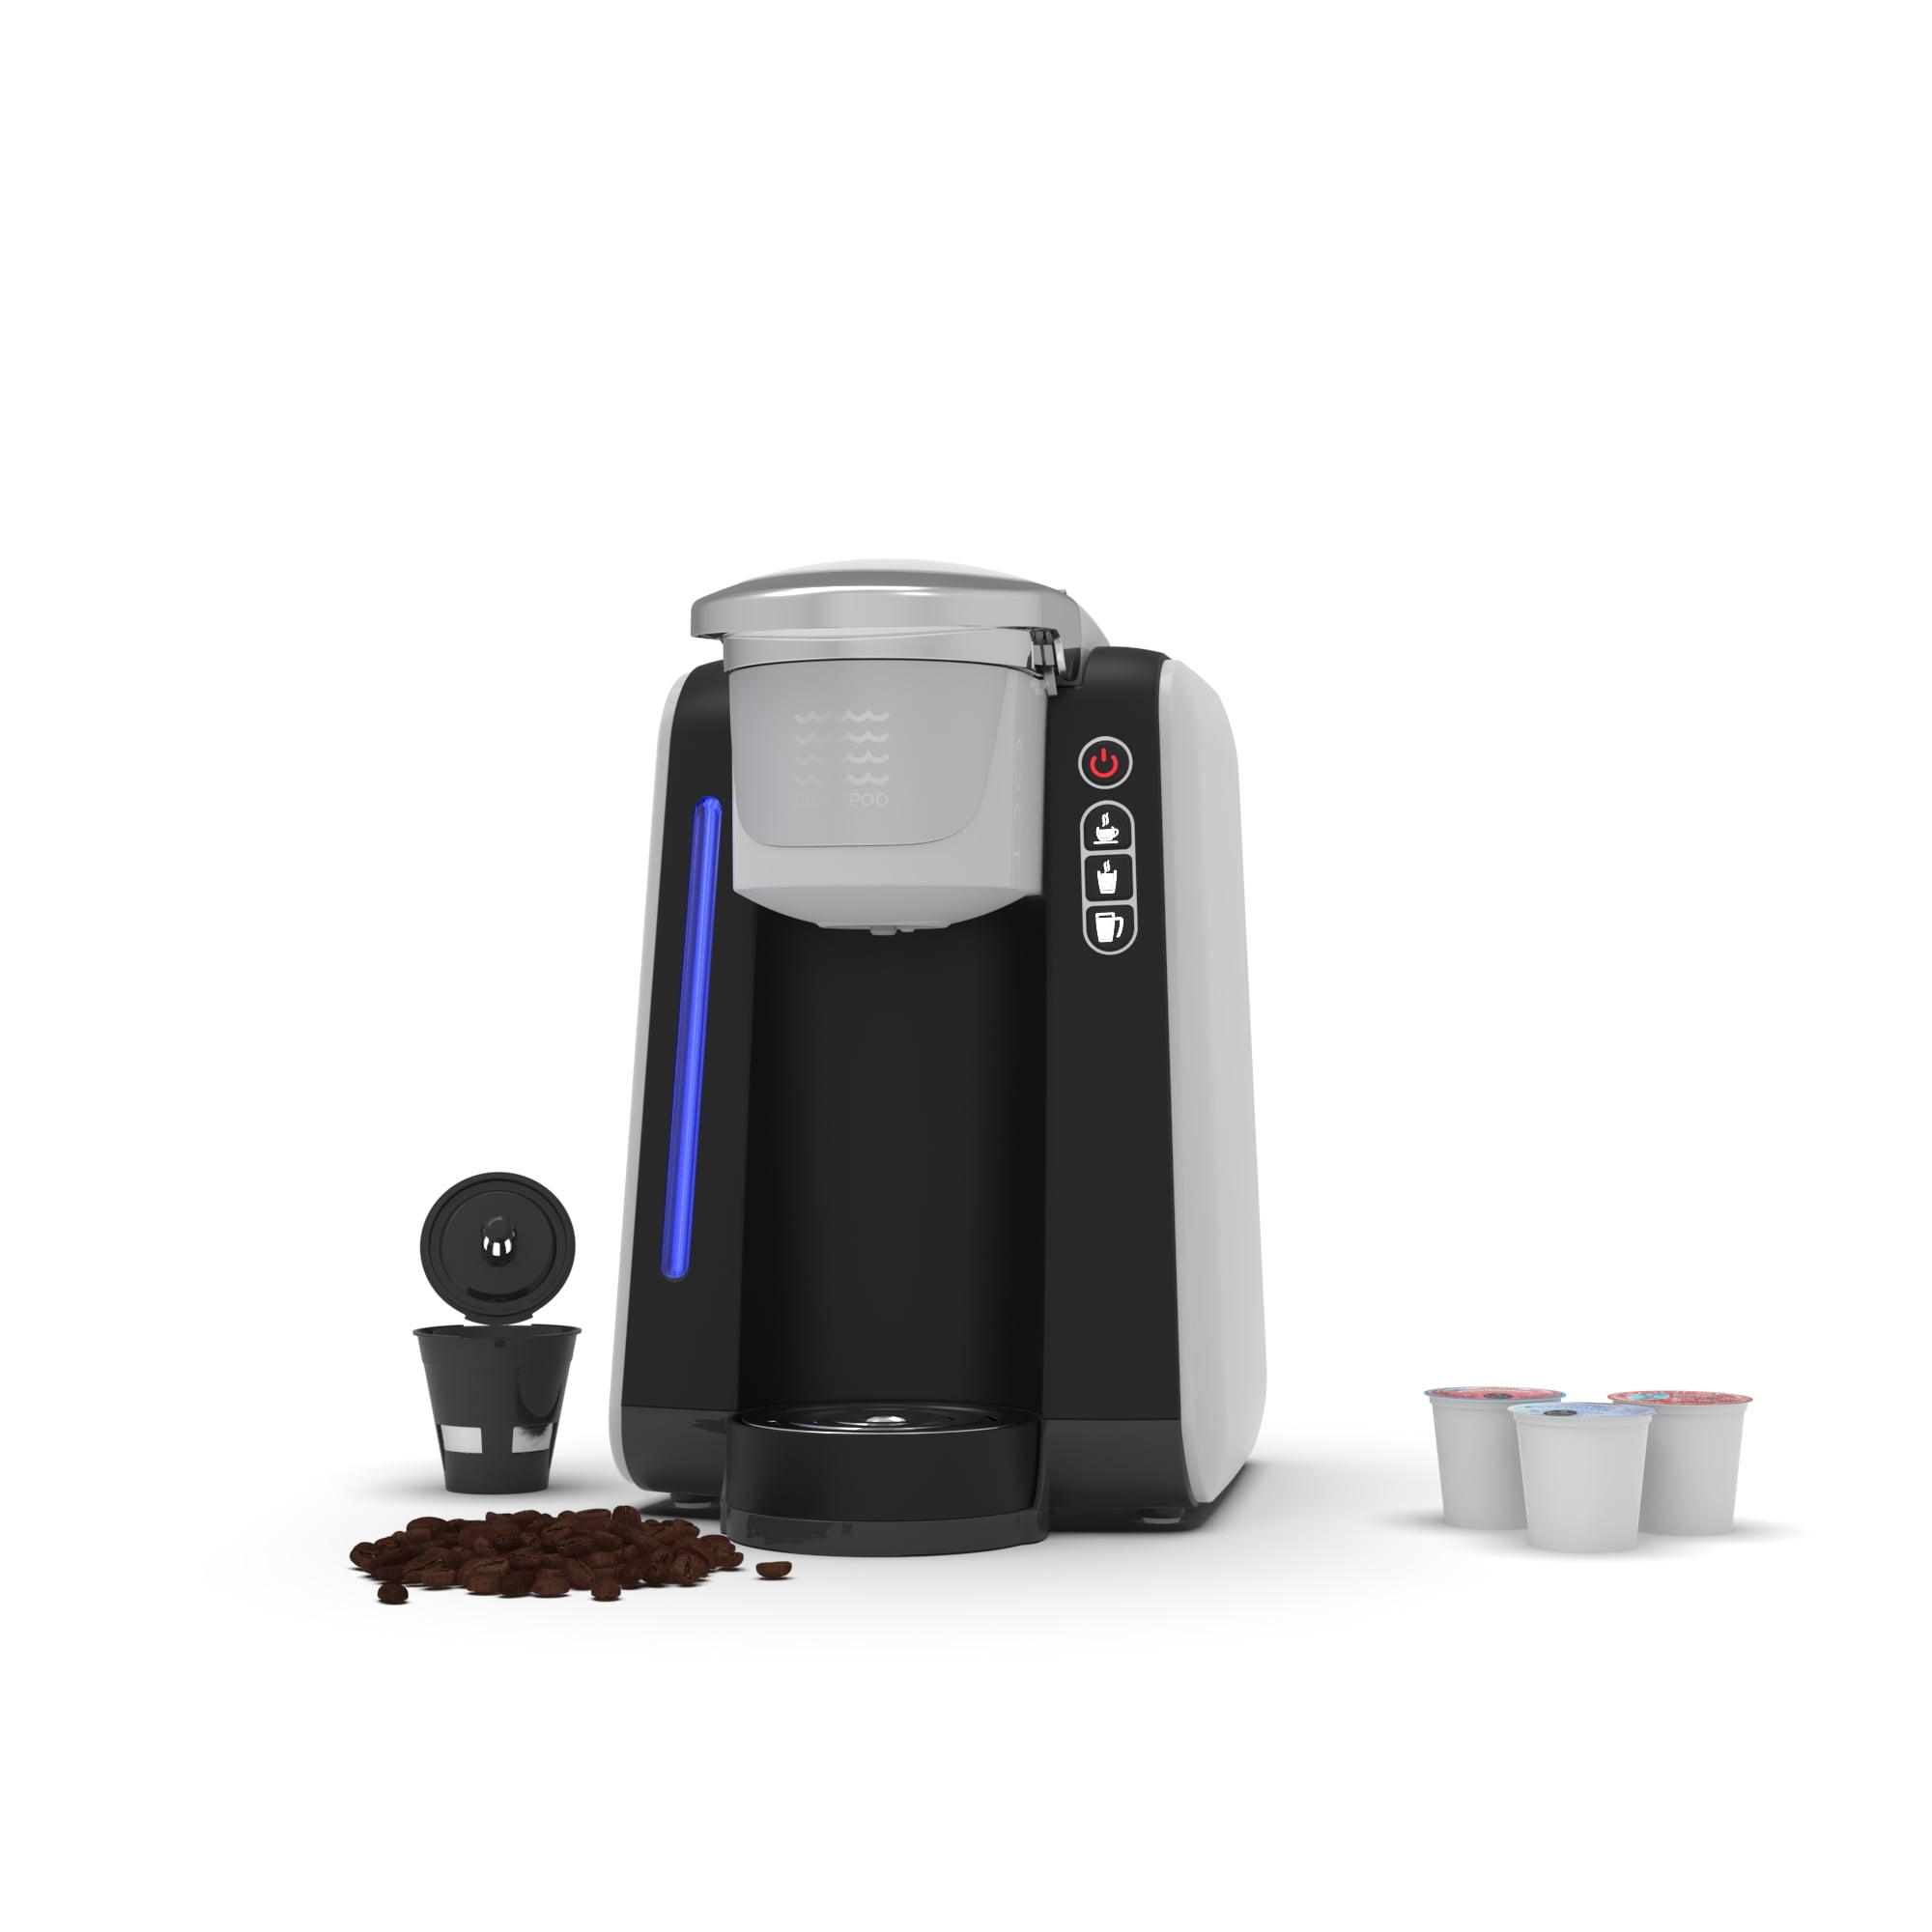 GAVASTO Pods & Grounds Single-Serve Coffee Maker, K-Cup Pod Compatible